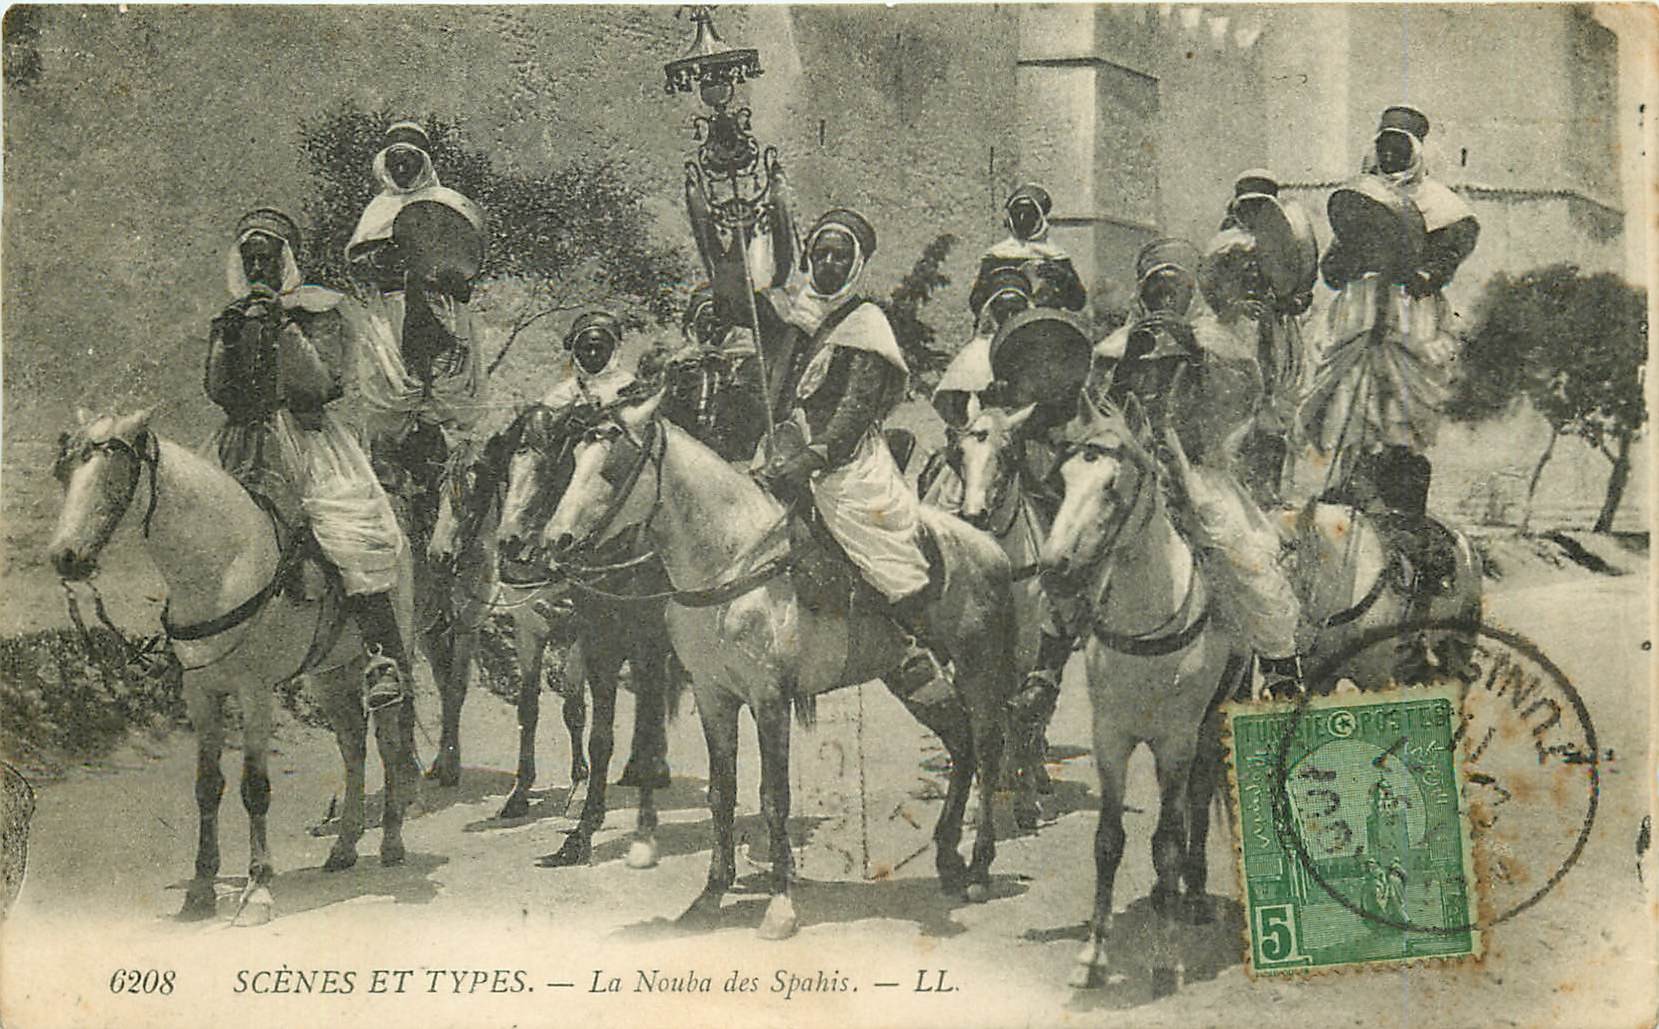 WW TUNISIE. La Nouba des Cavaliers Spahis 1911